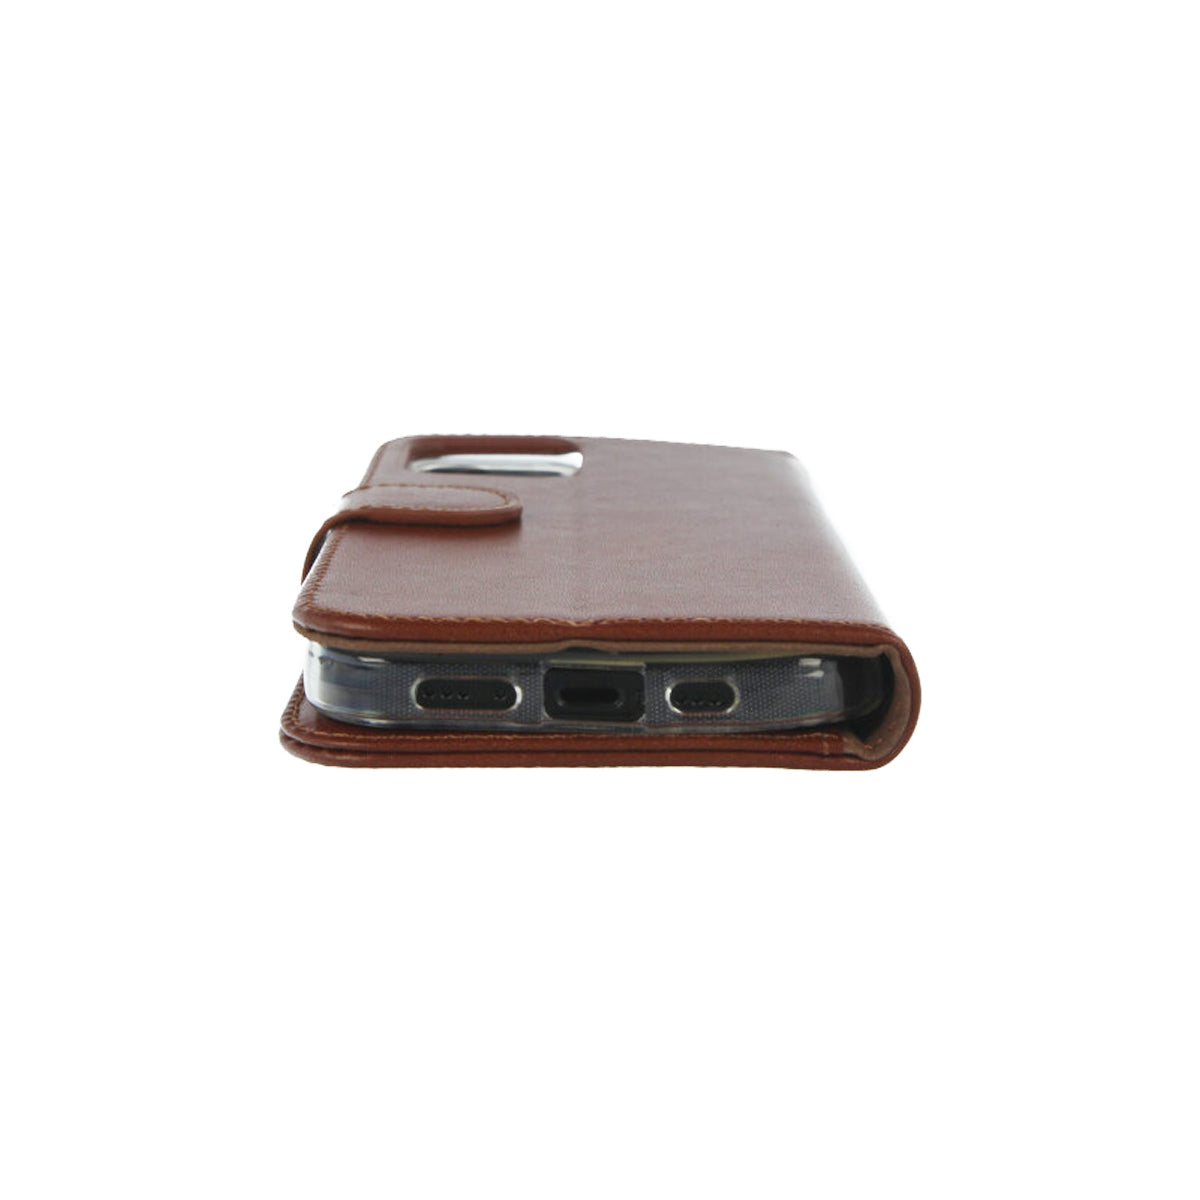 Book Case Classic Brown iPhone 12 Pro Max